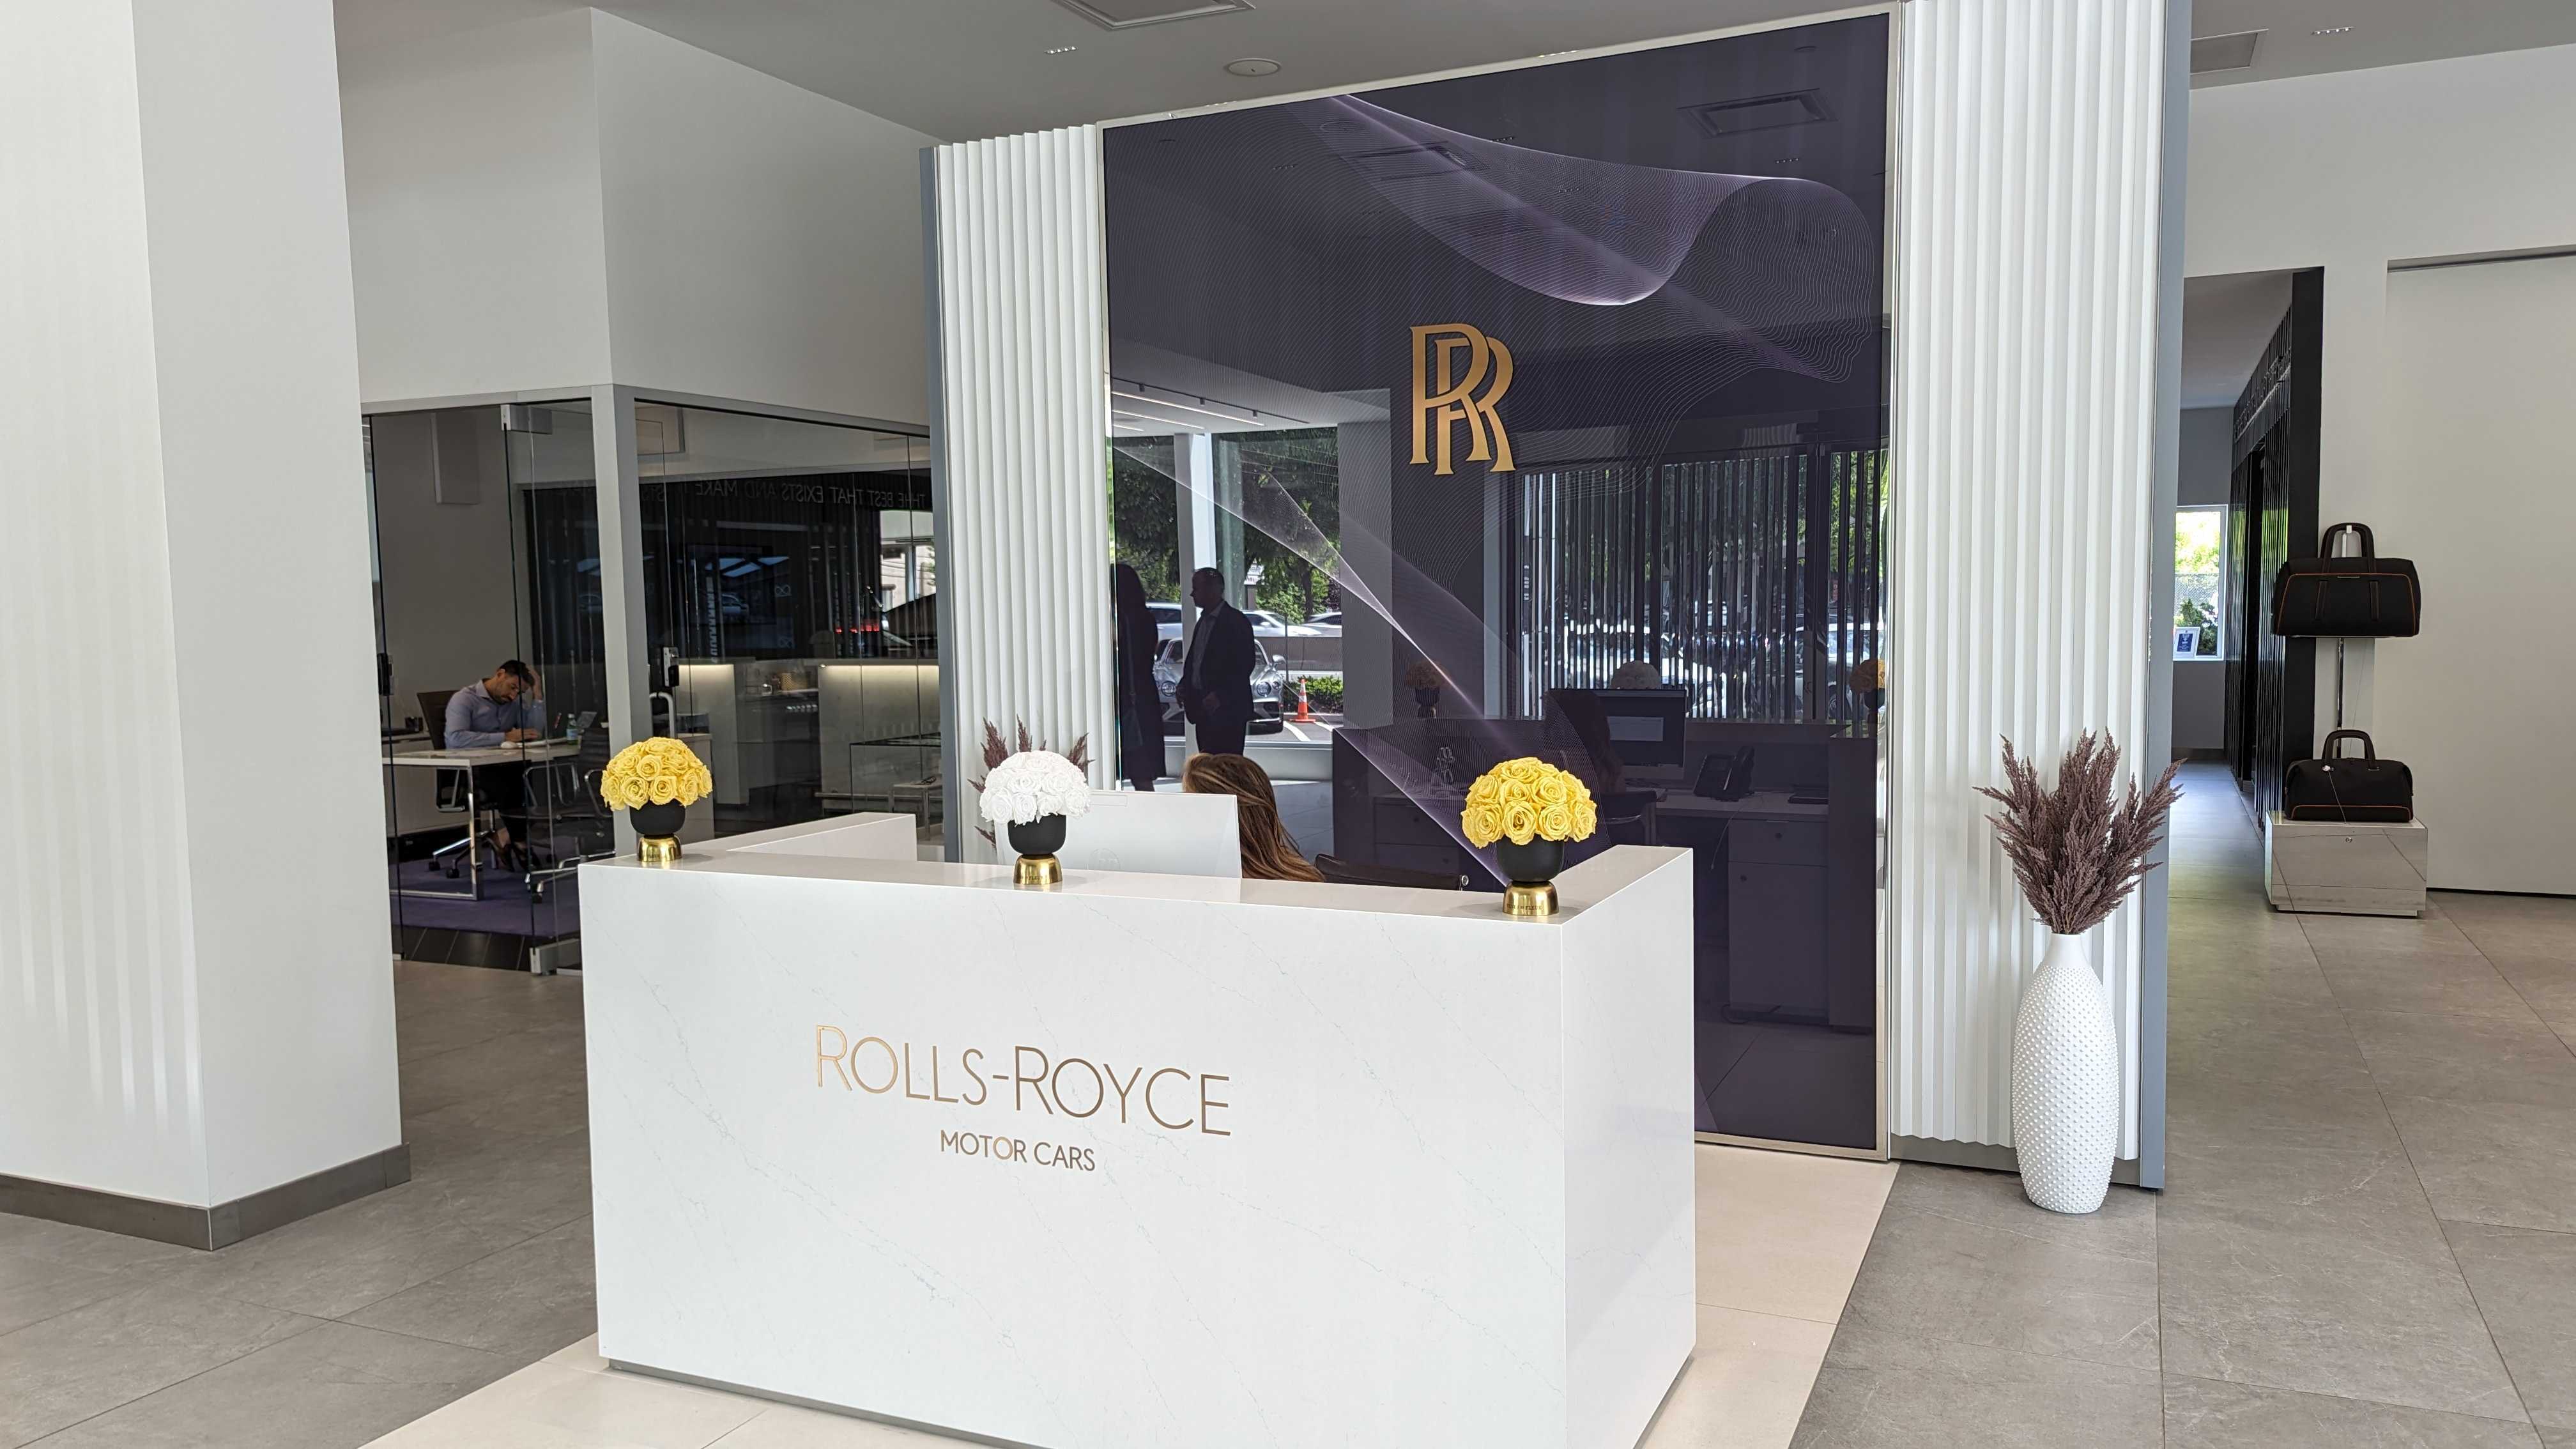 The entrance to a Rolls Royce dealerchip